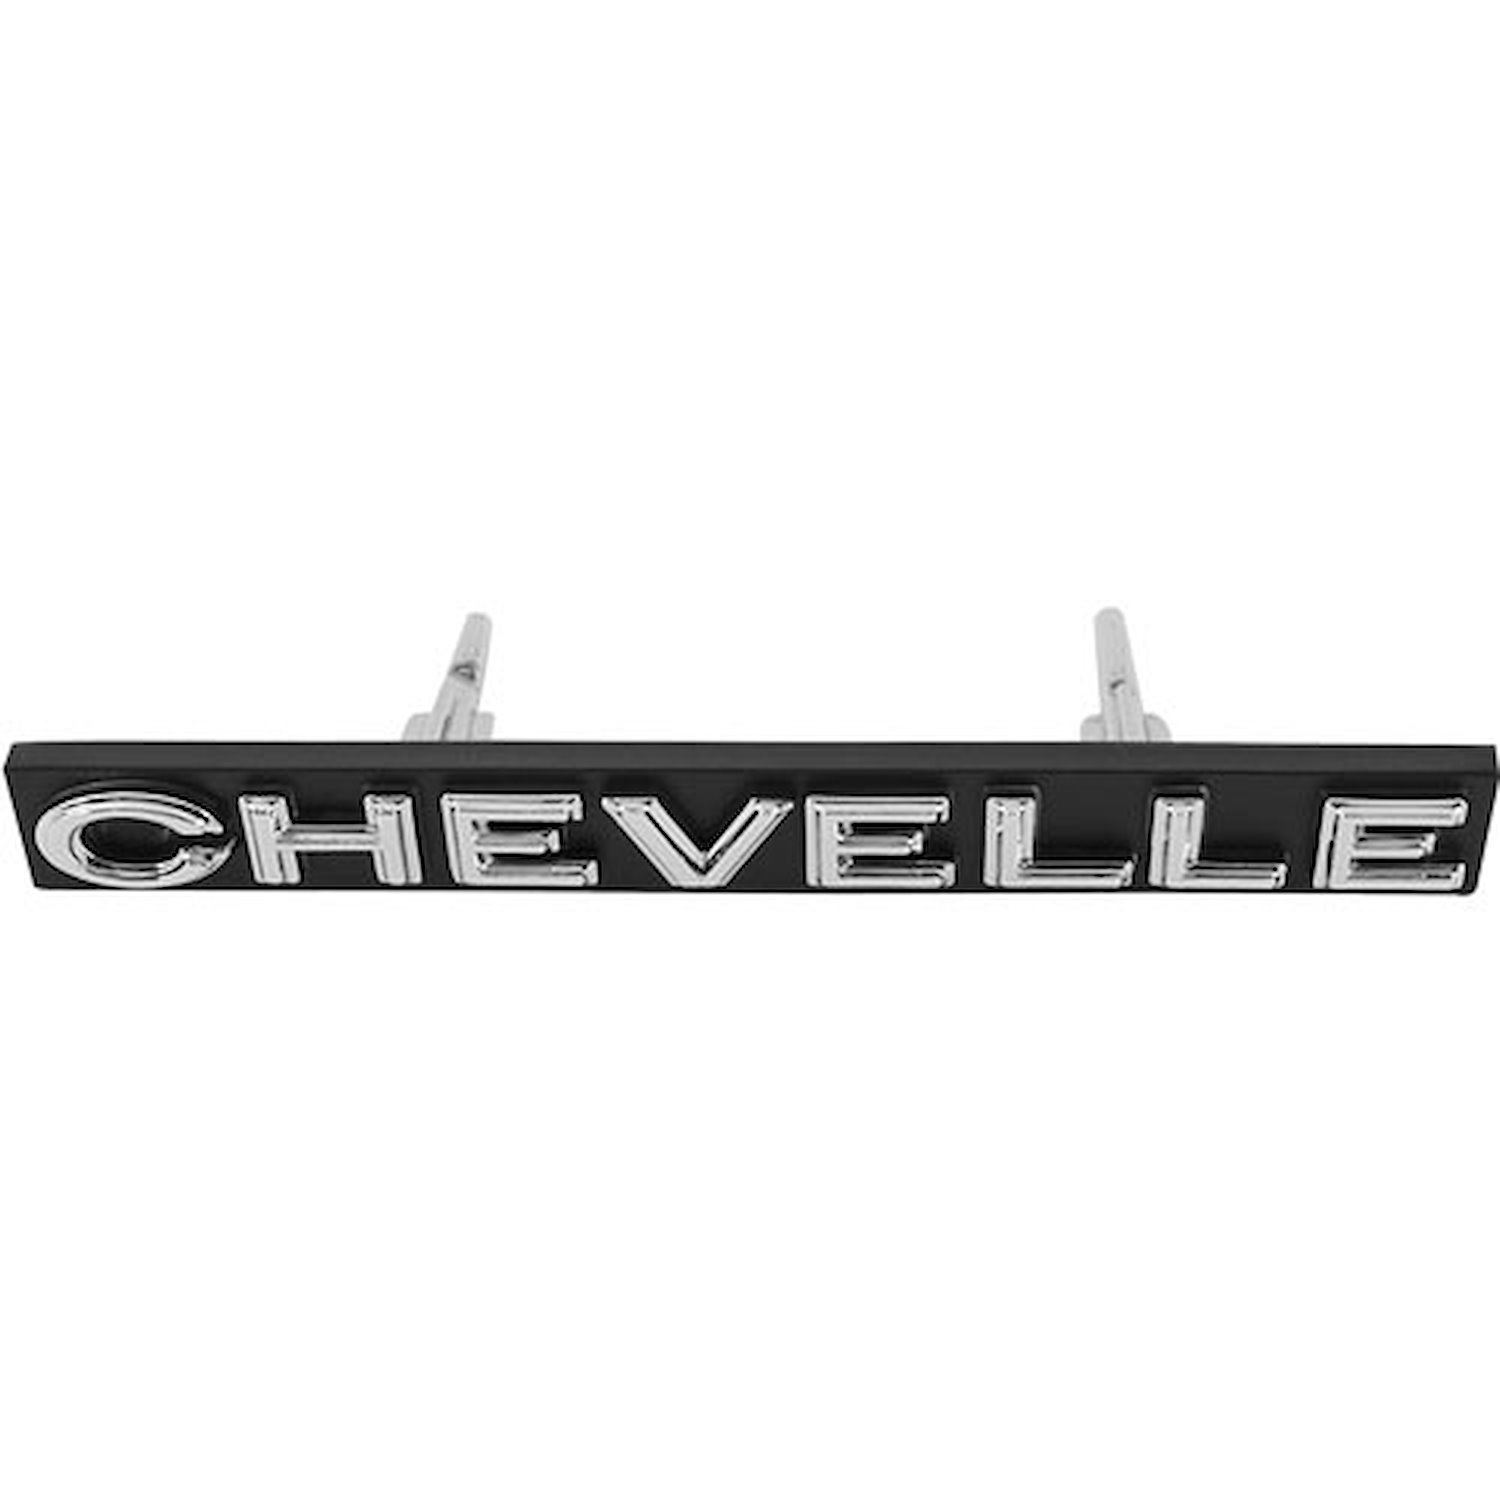 Grille Emblem 1972 Chevy Chevelle